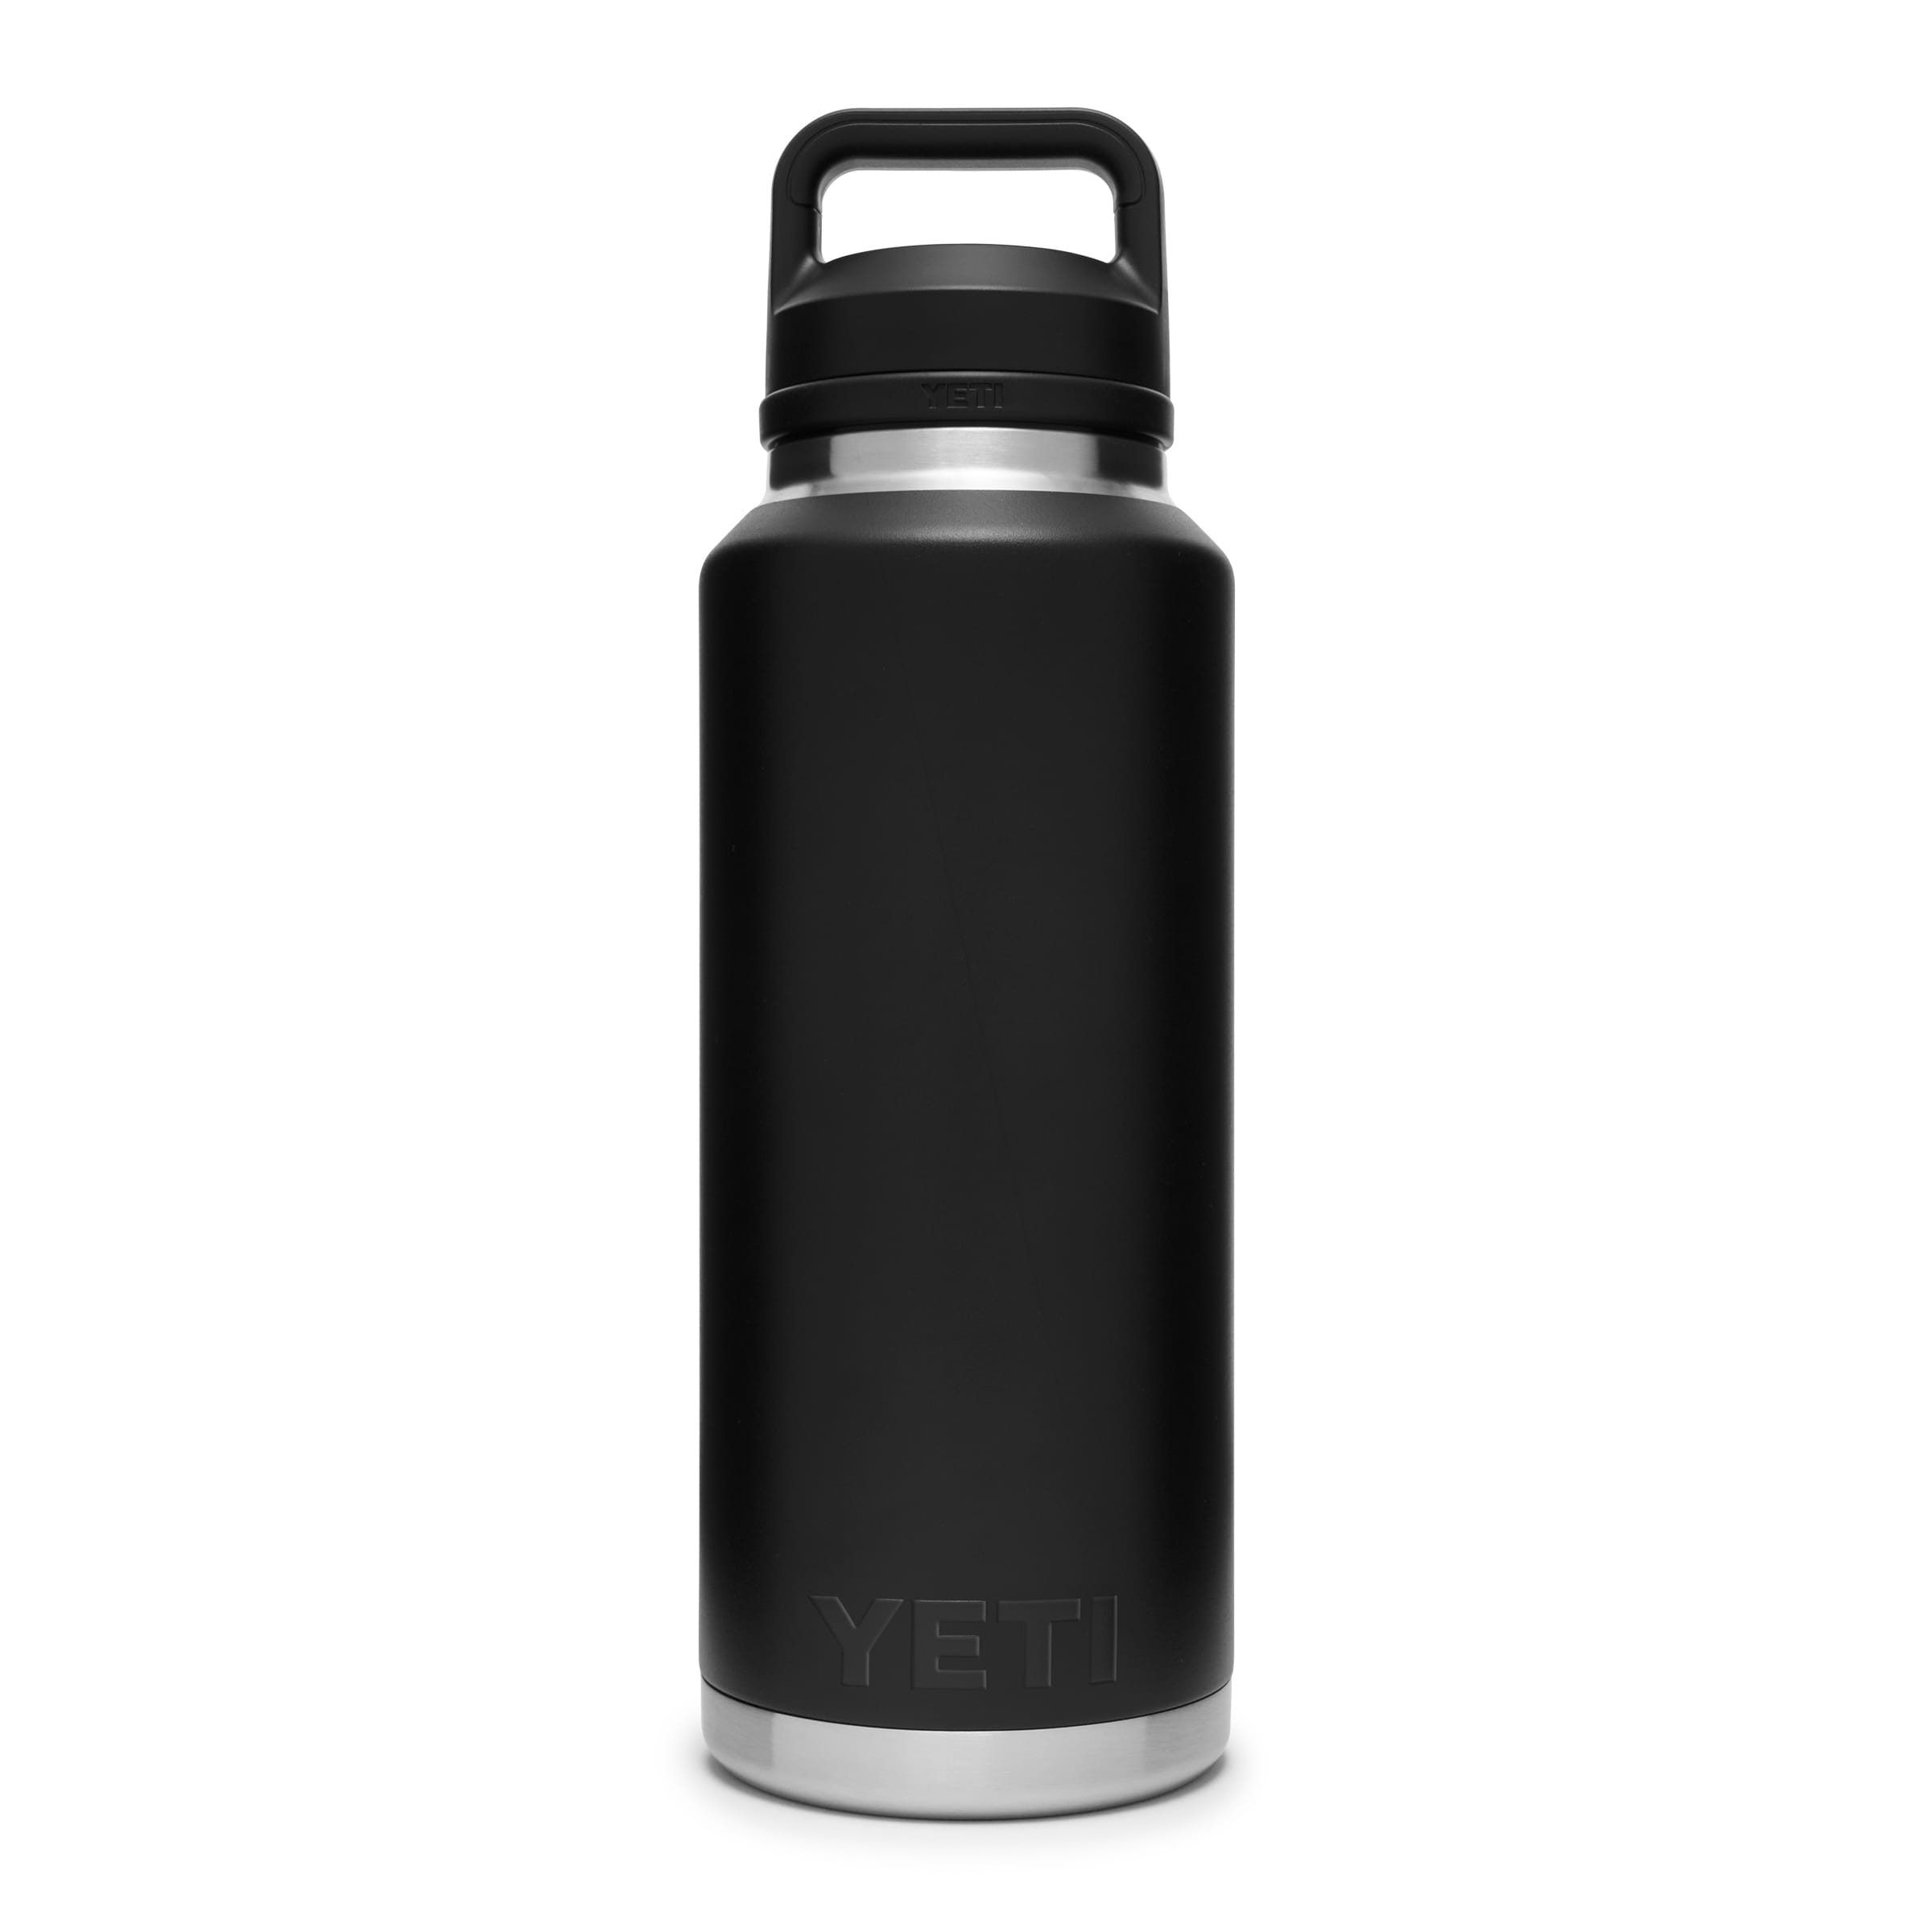 YETI Rambler 46-fl oz Stainless Steel Water Bottle in the Water